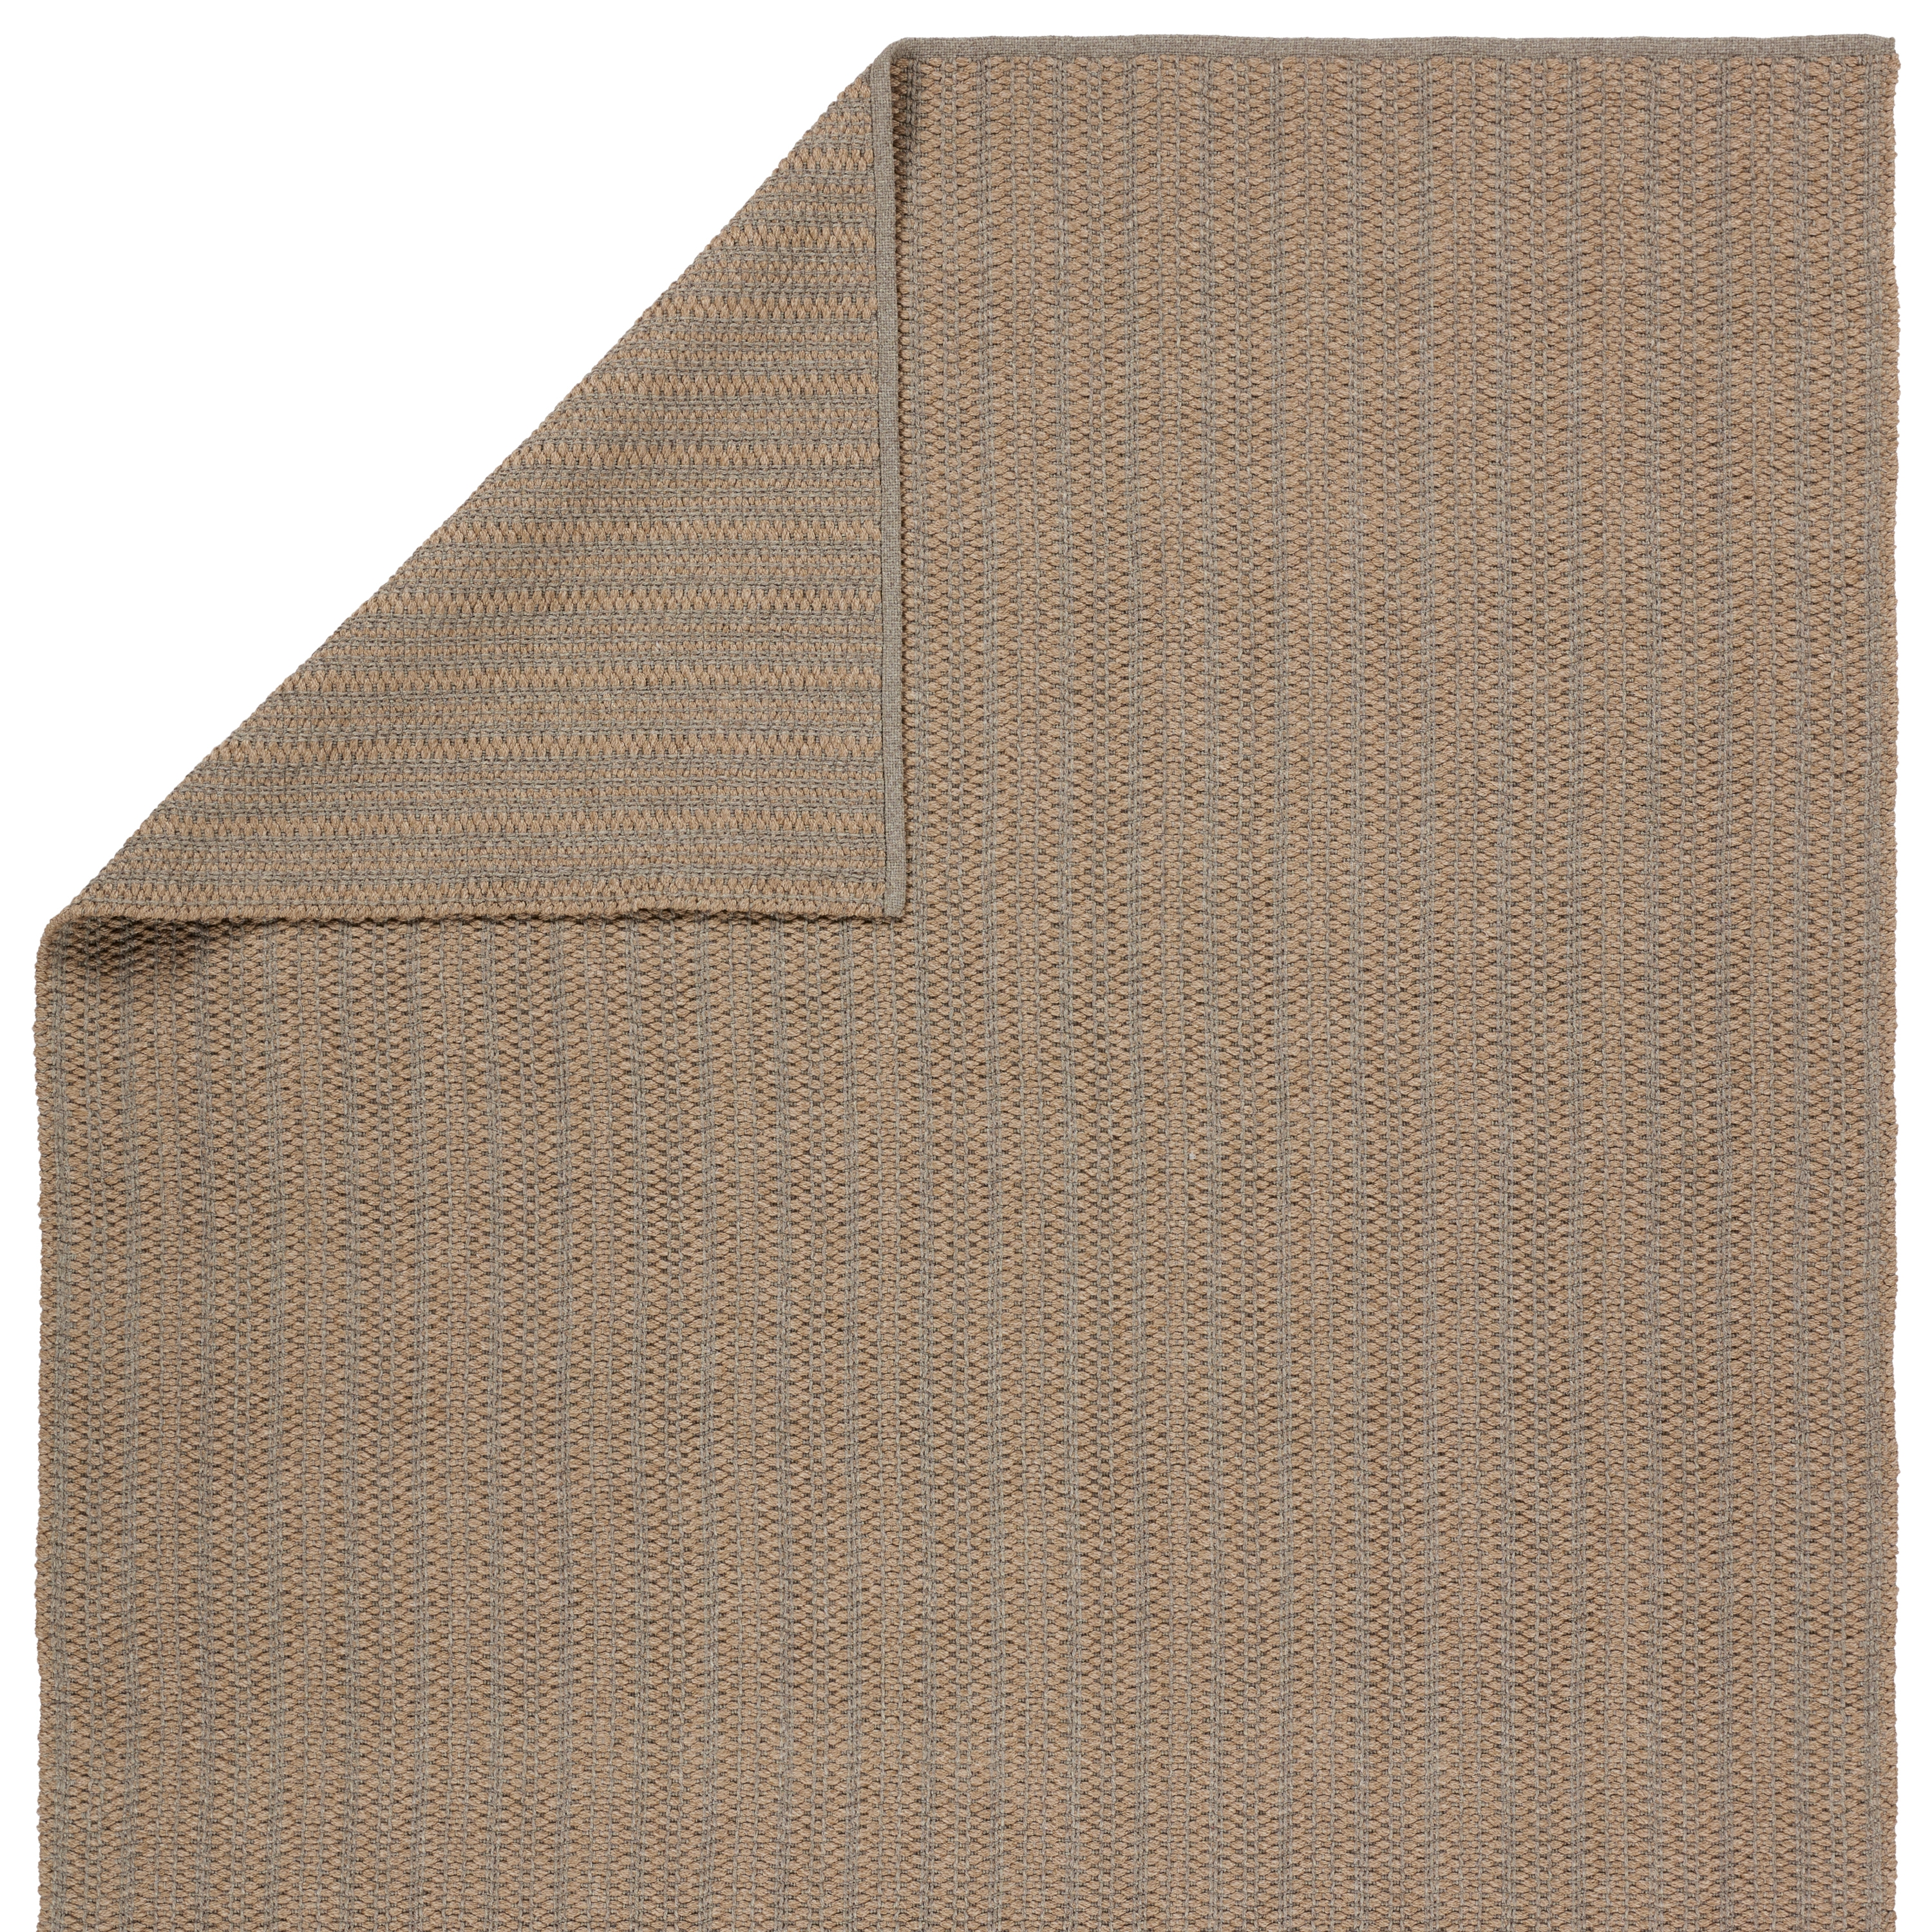 Elmas Handmade Indoor/Outdoor Striped Tan/Gray Area Rug (4'X6') - Image 2